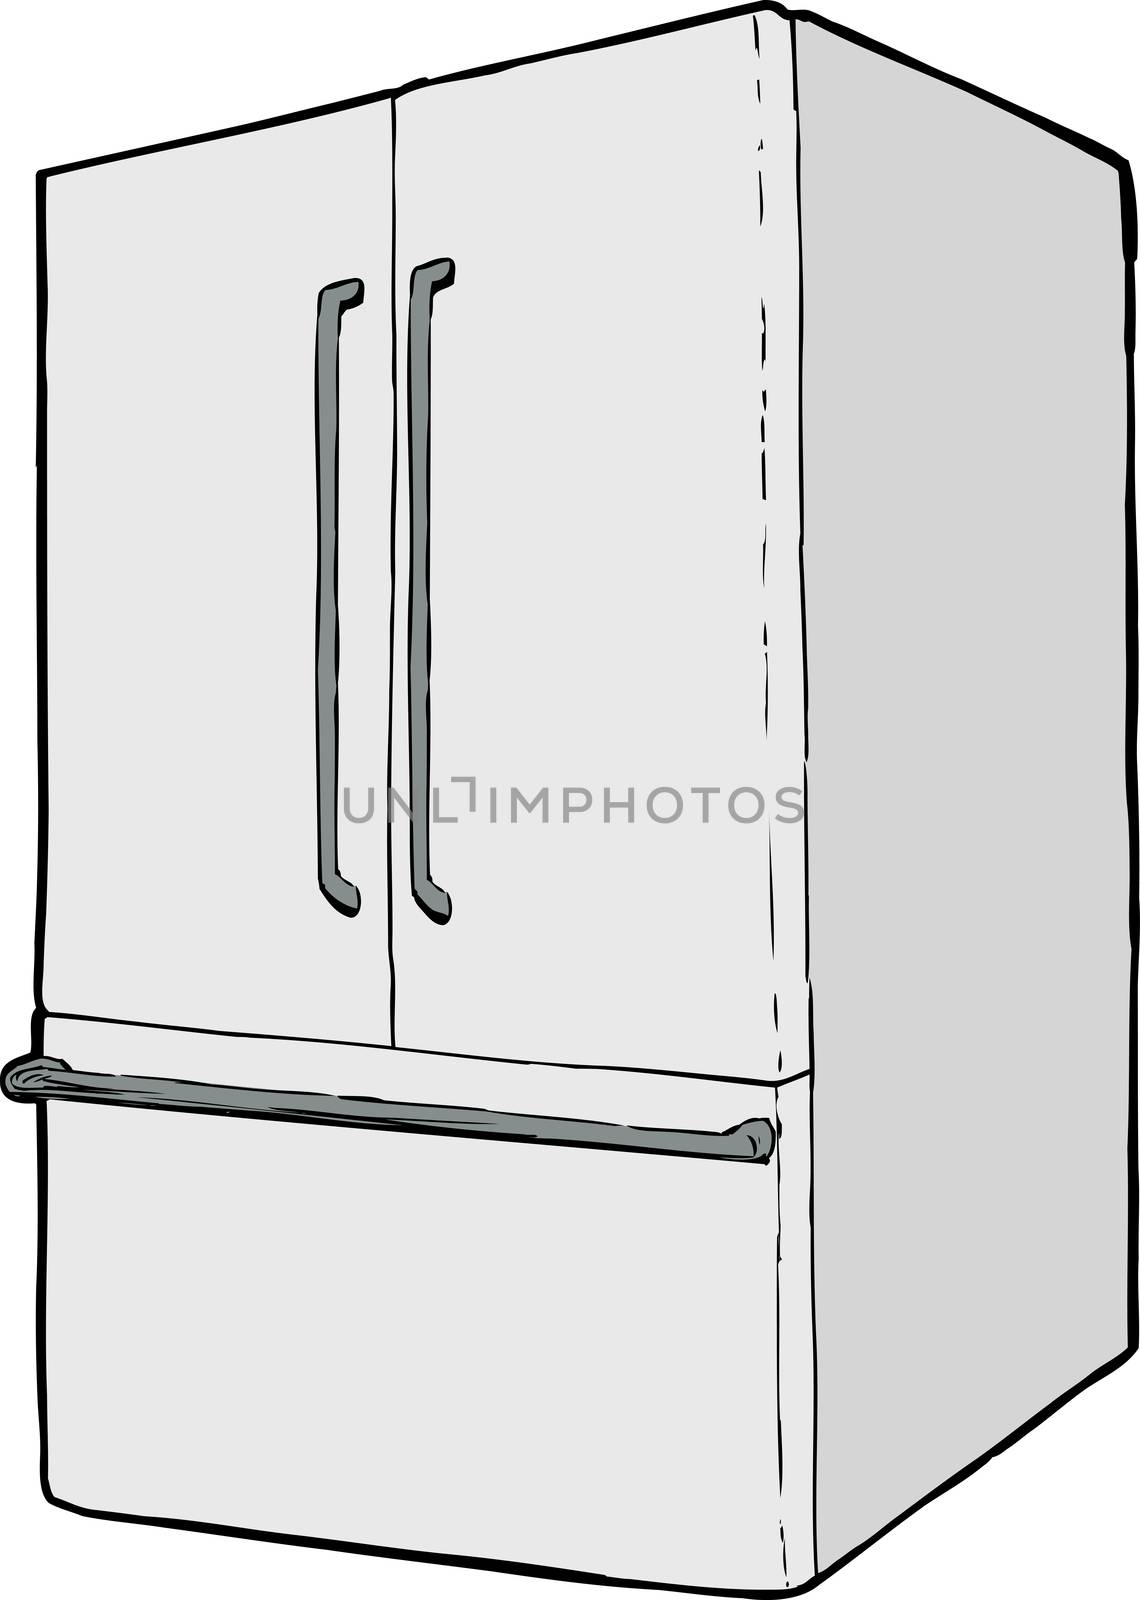 Large single closed refrigerator by TheBlackRhino